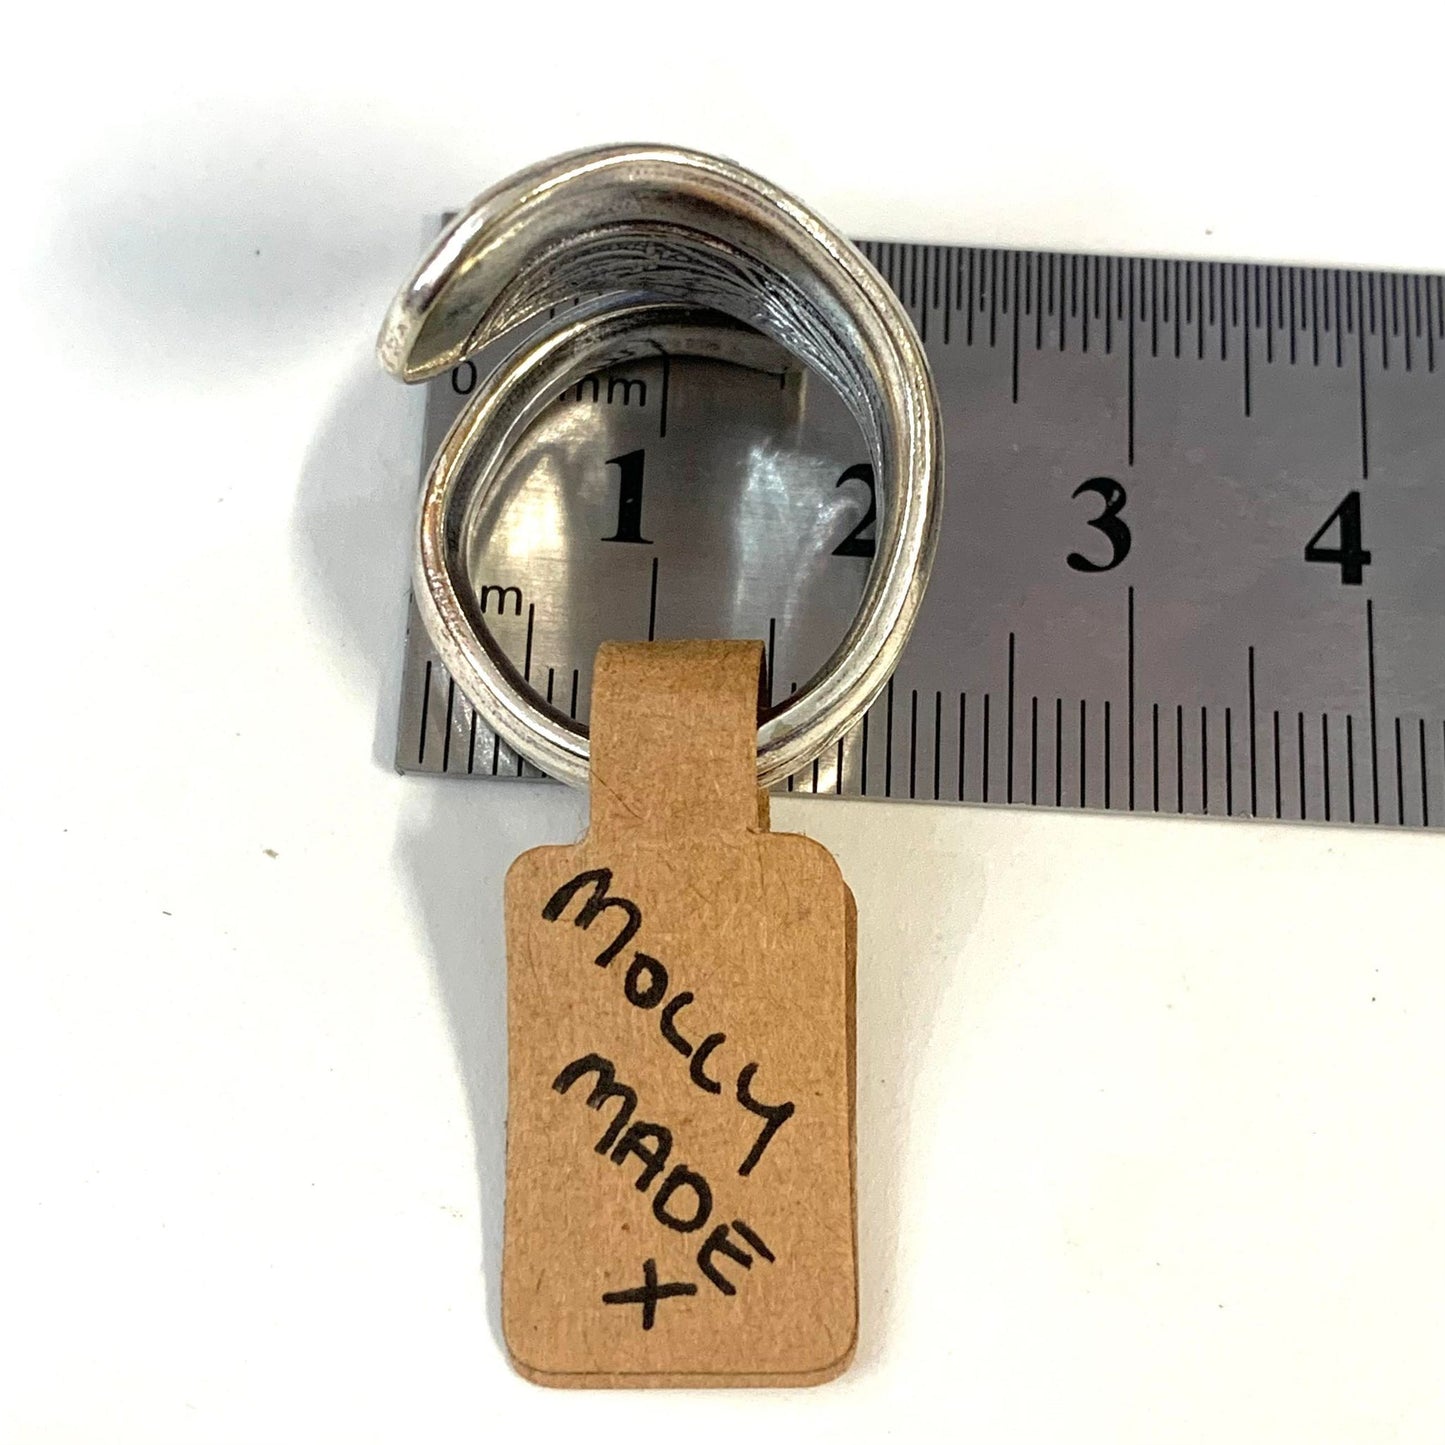 MOLLY MADE - Silverware Ring #7 - Flourish